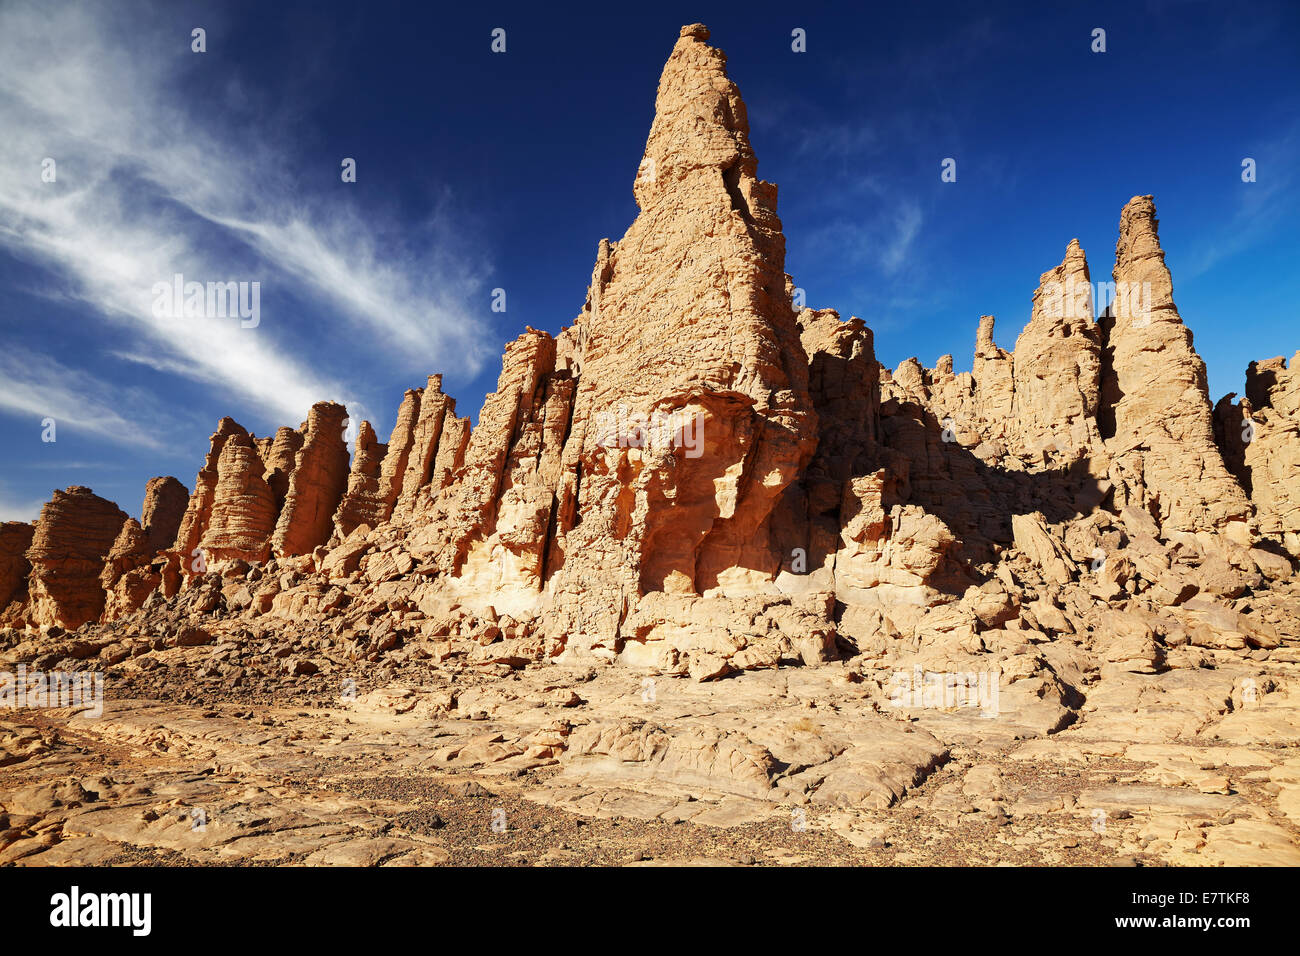 Falaises de grès bizarres en désert du Sahara, Tassili N'Ajjer, Algérie Banque D'Images